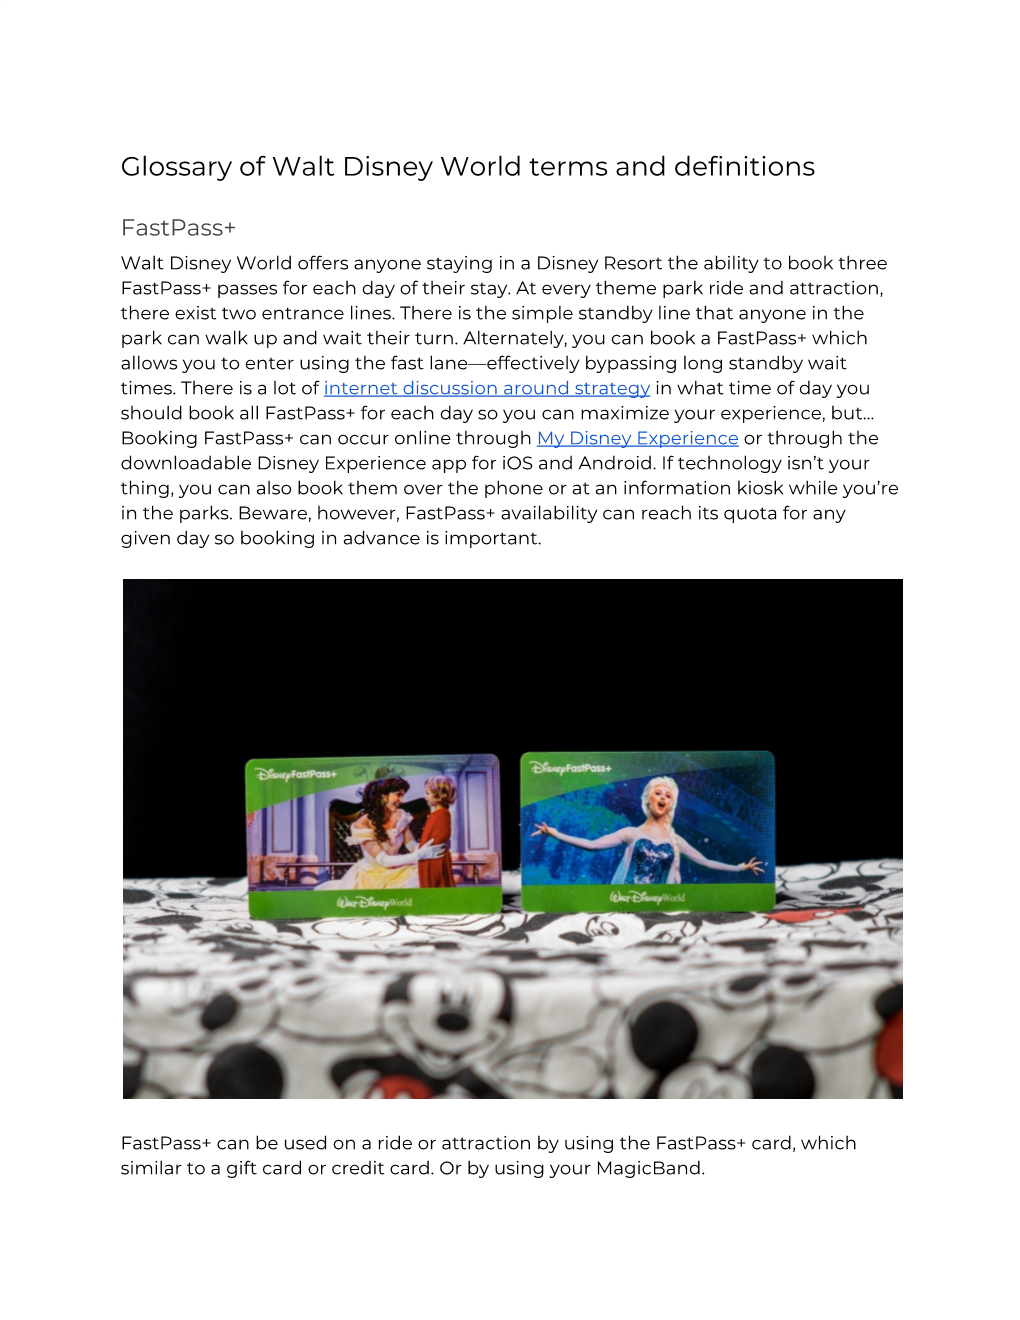 Glossary of Walt Disney World Terms